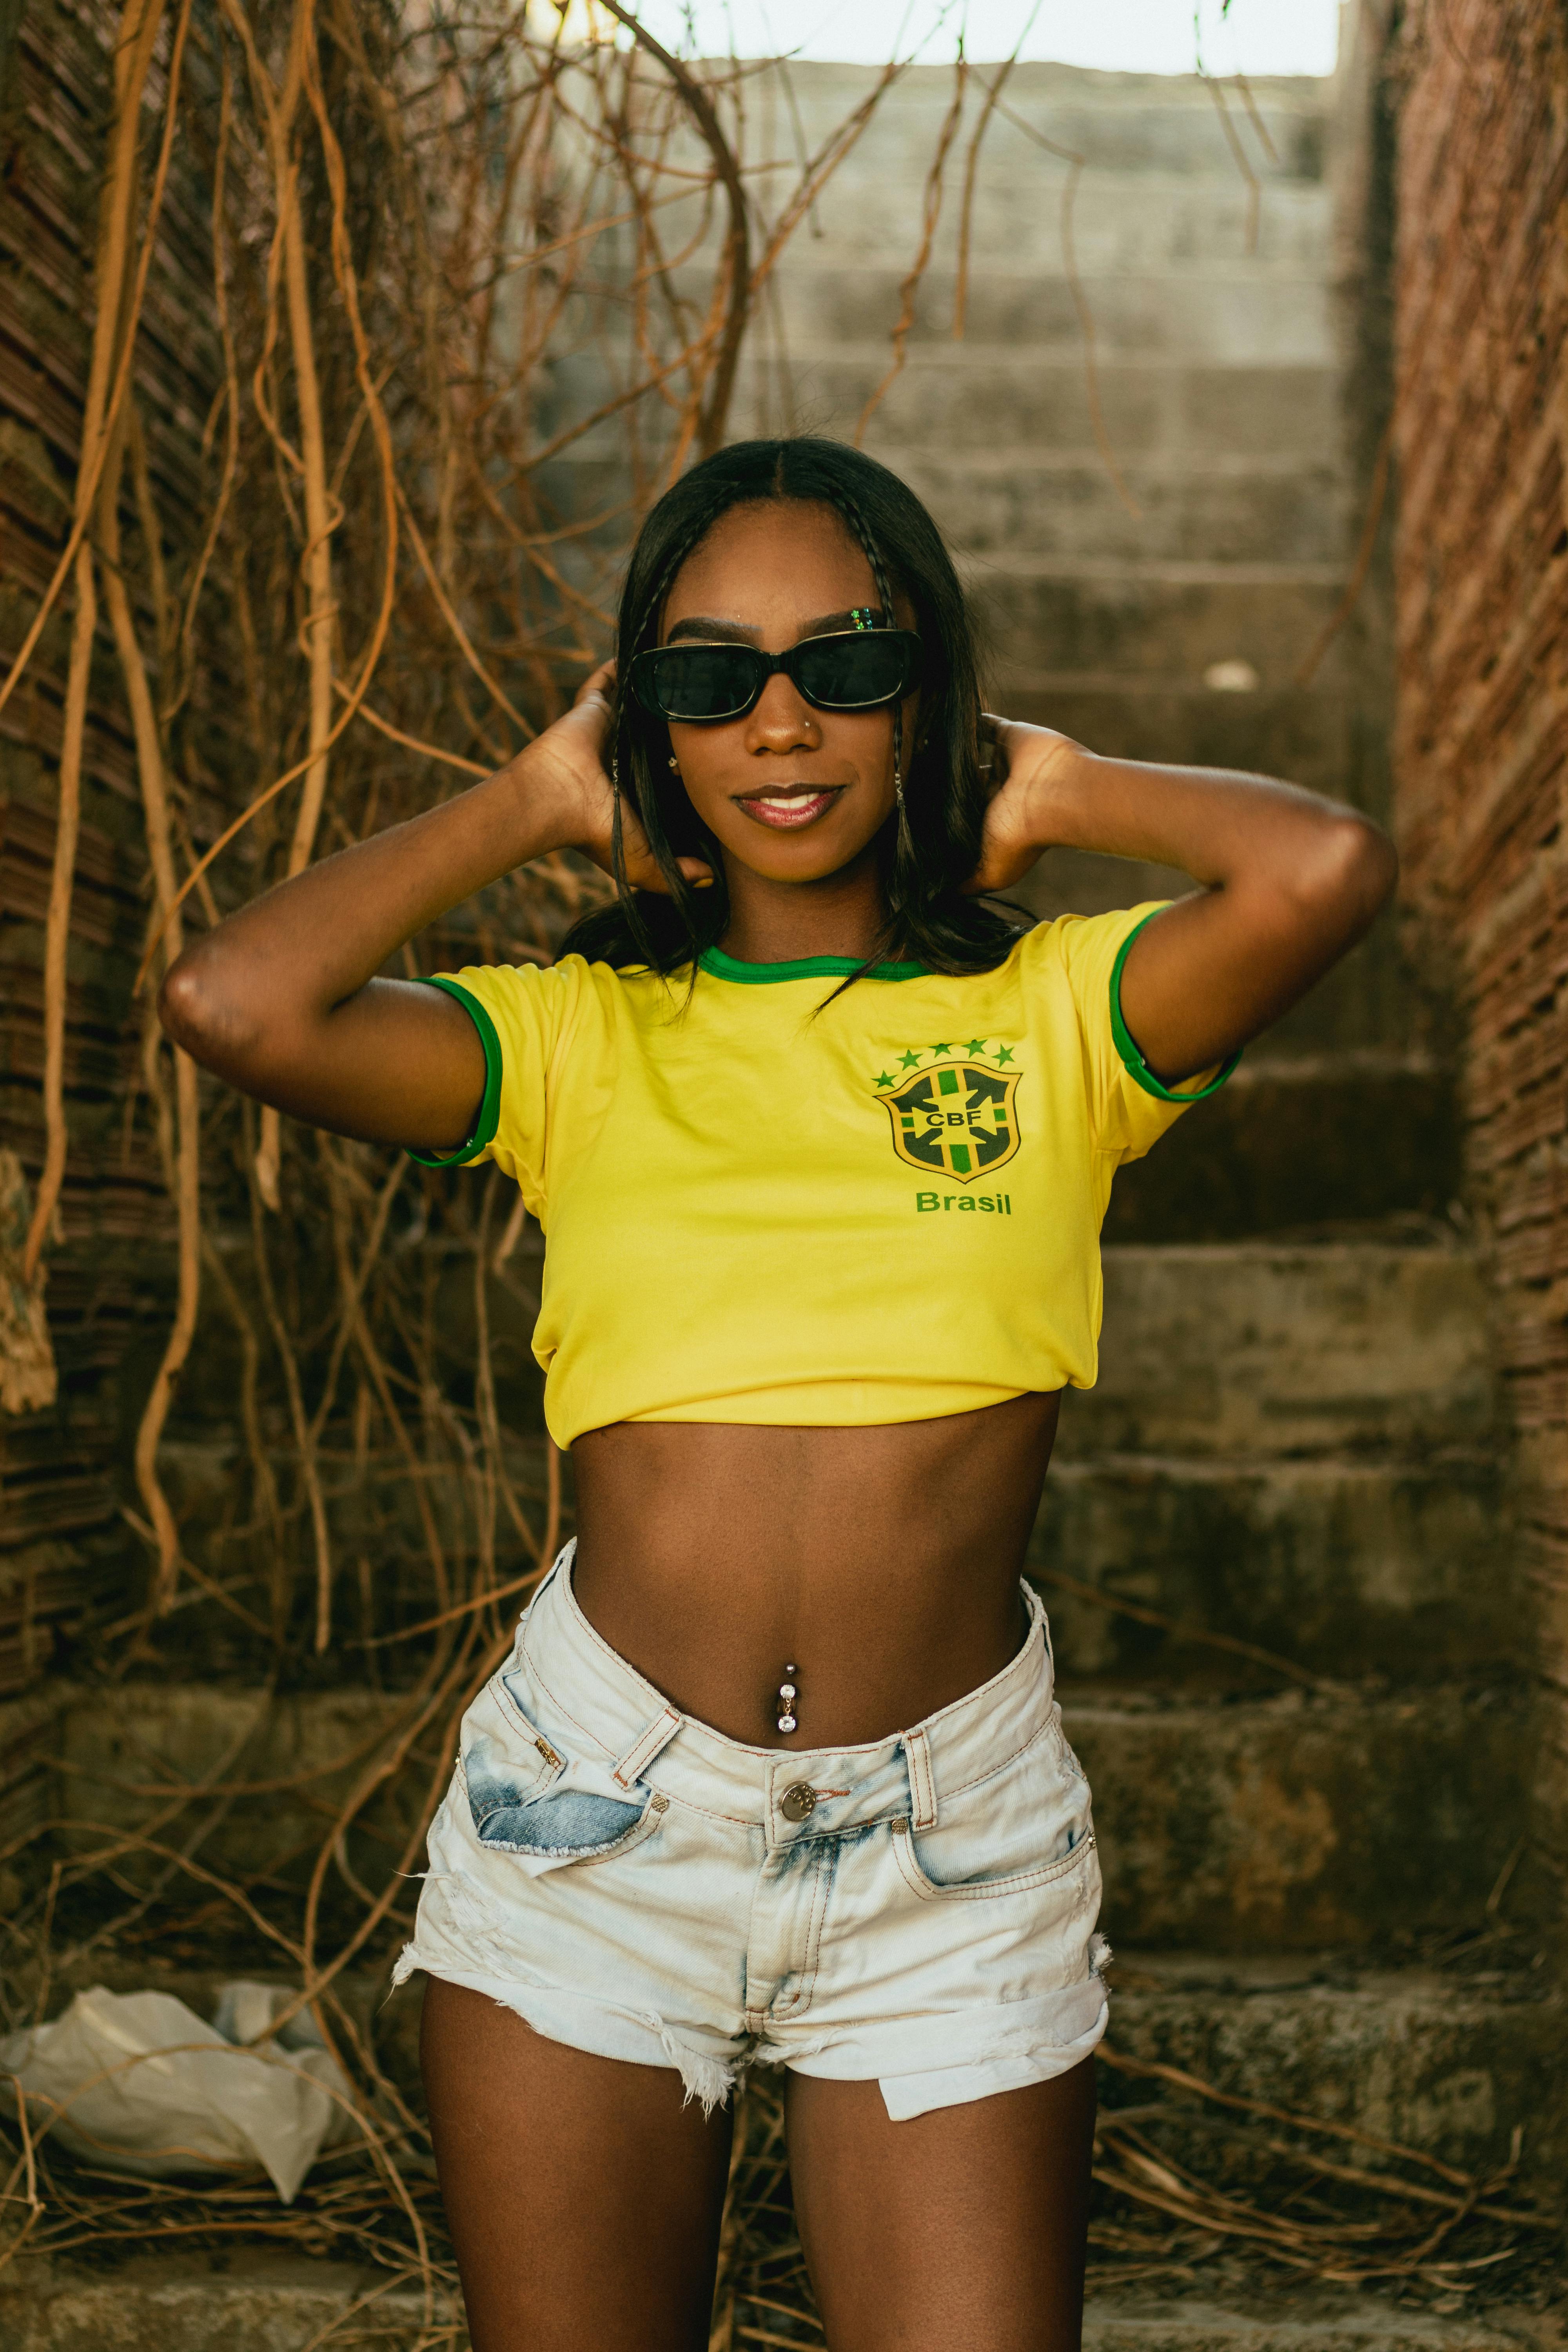 Woman in Yellow Brasil Crop Top Posing · Free Stock Photo